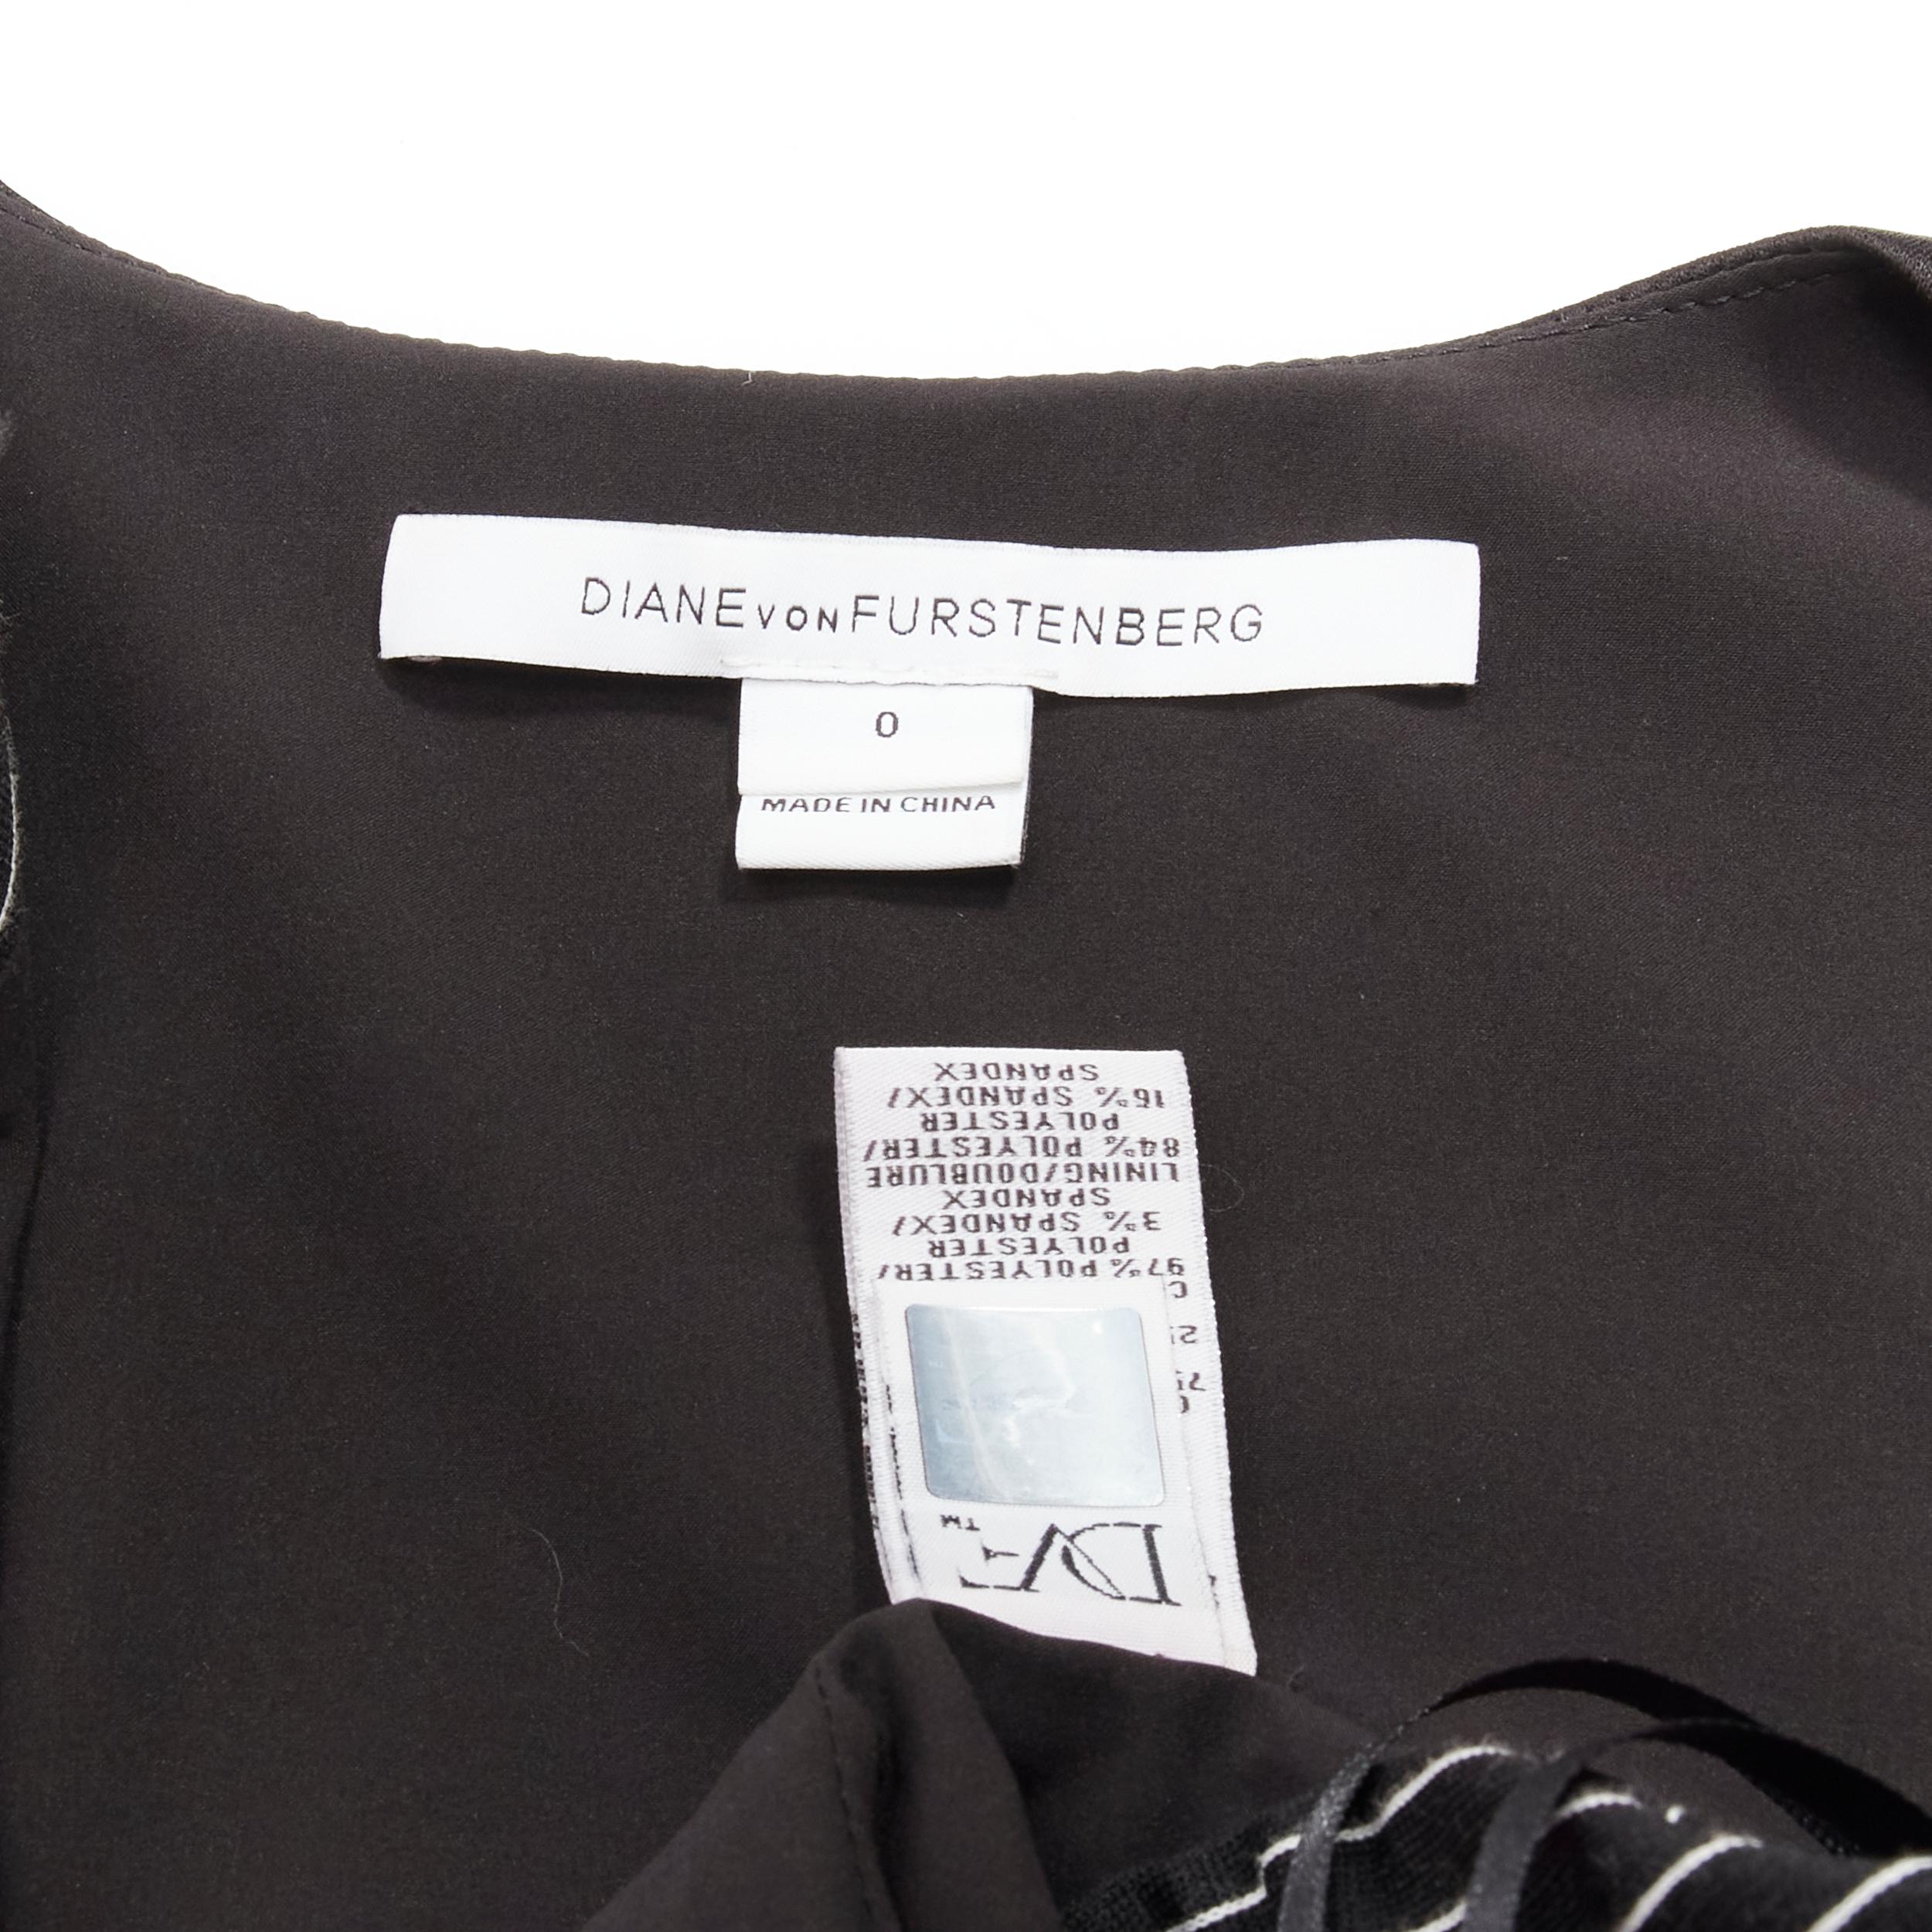 DIANE VON FURSTENBERG Gilet Dress black white vertical pinstripes dress US0 XS For Sale 5